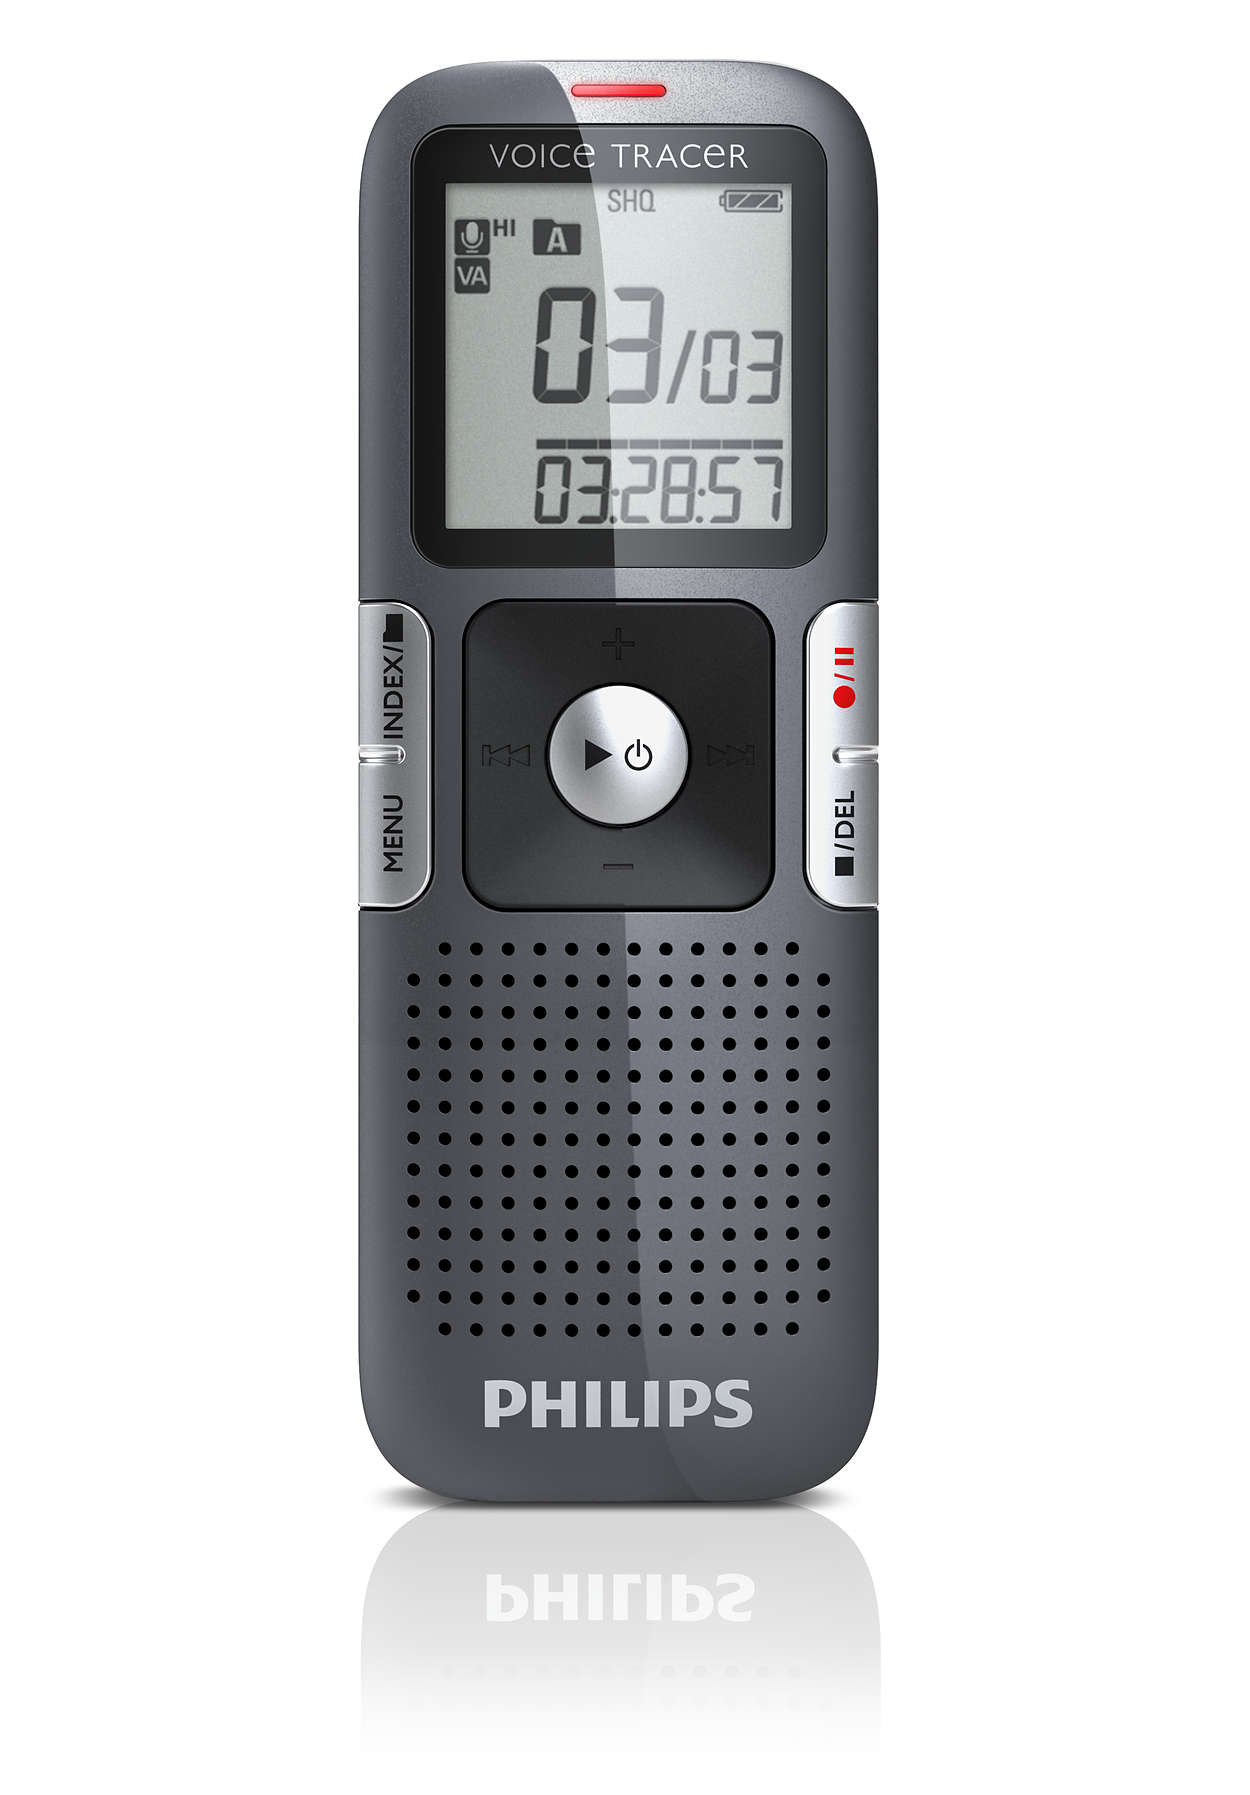 Philips Voice Tracer. Диктофон с большими кнопками. Китайский диктофон. Диктофон.